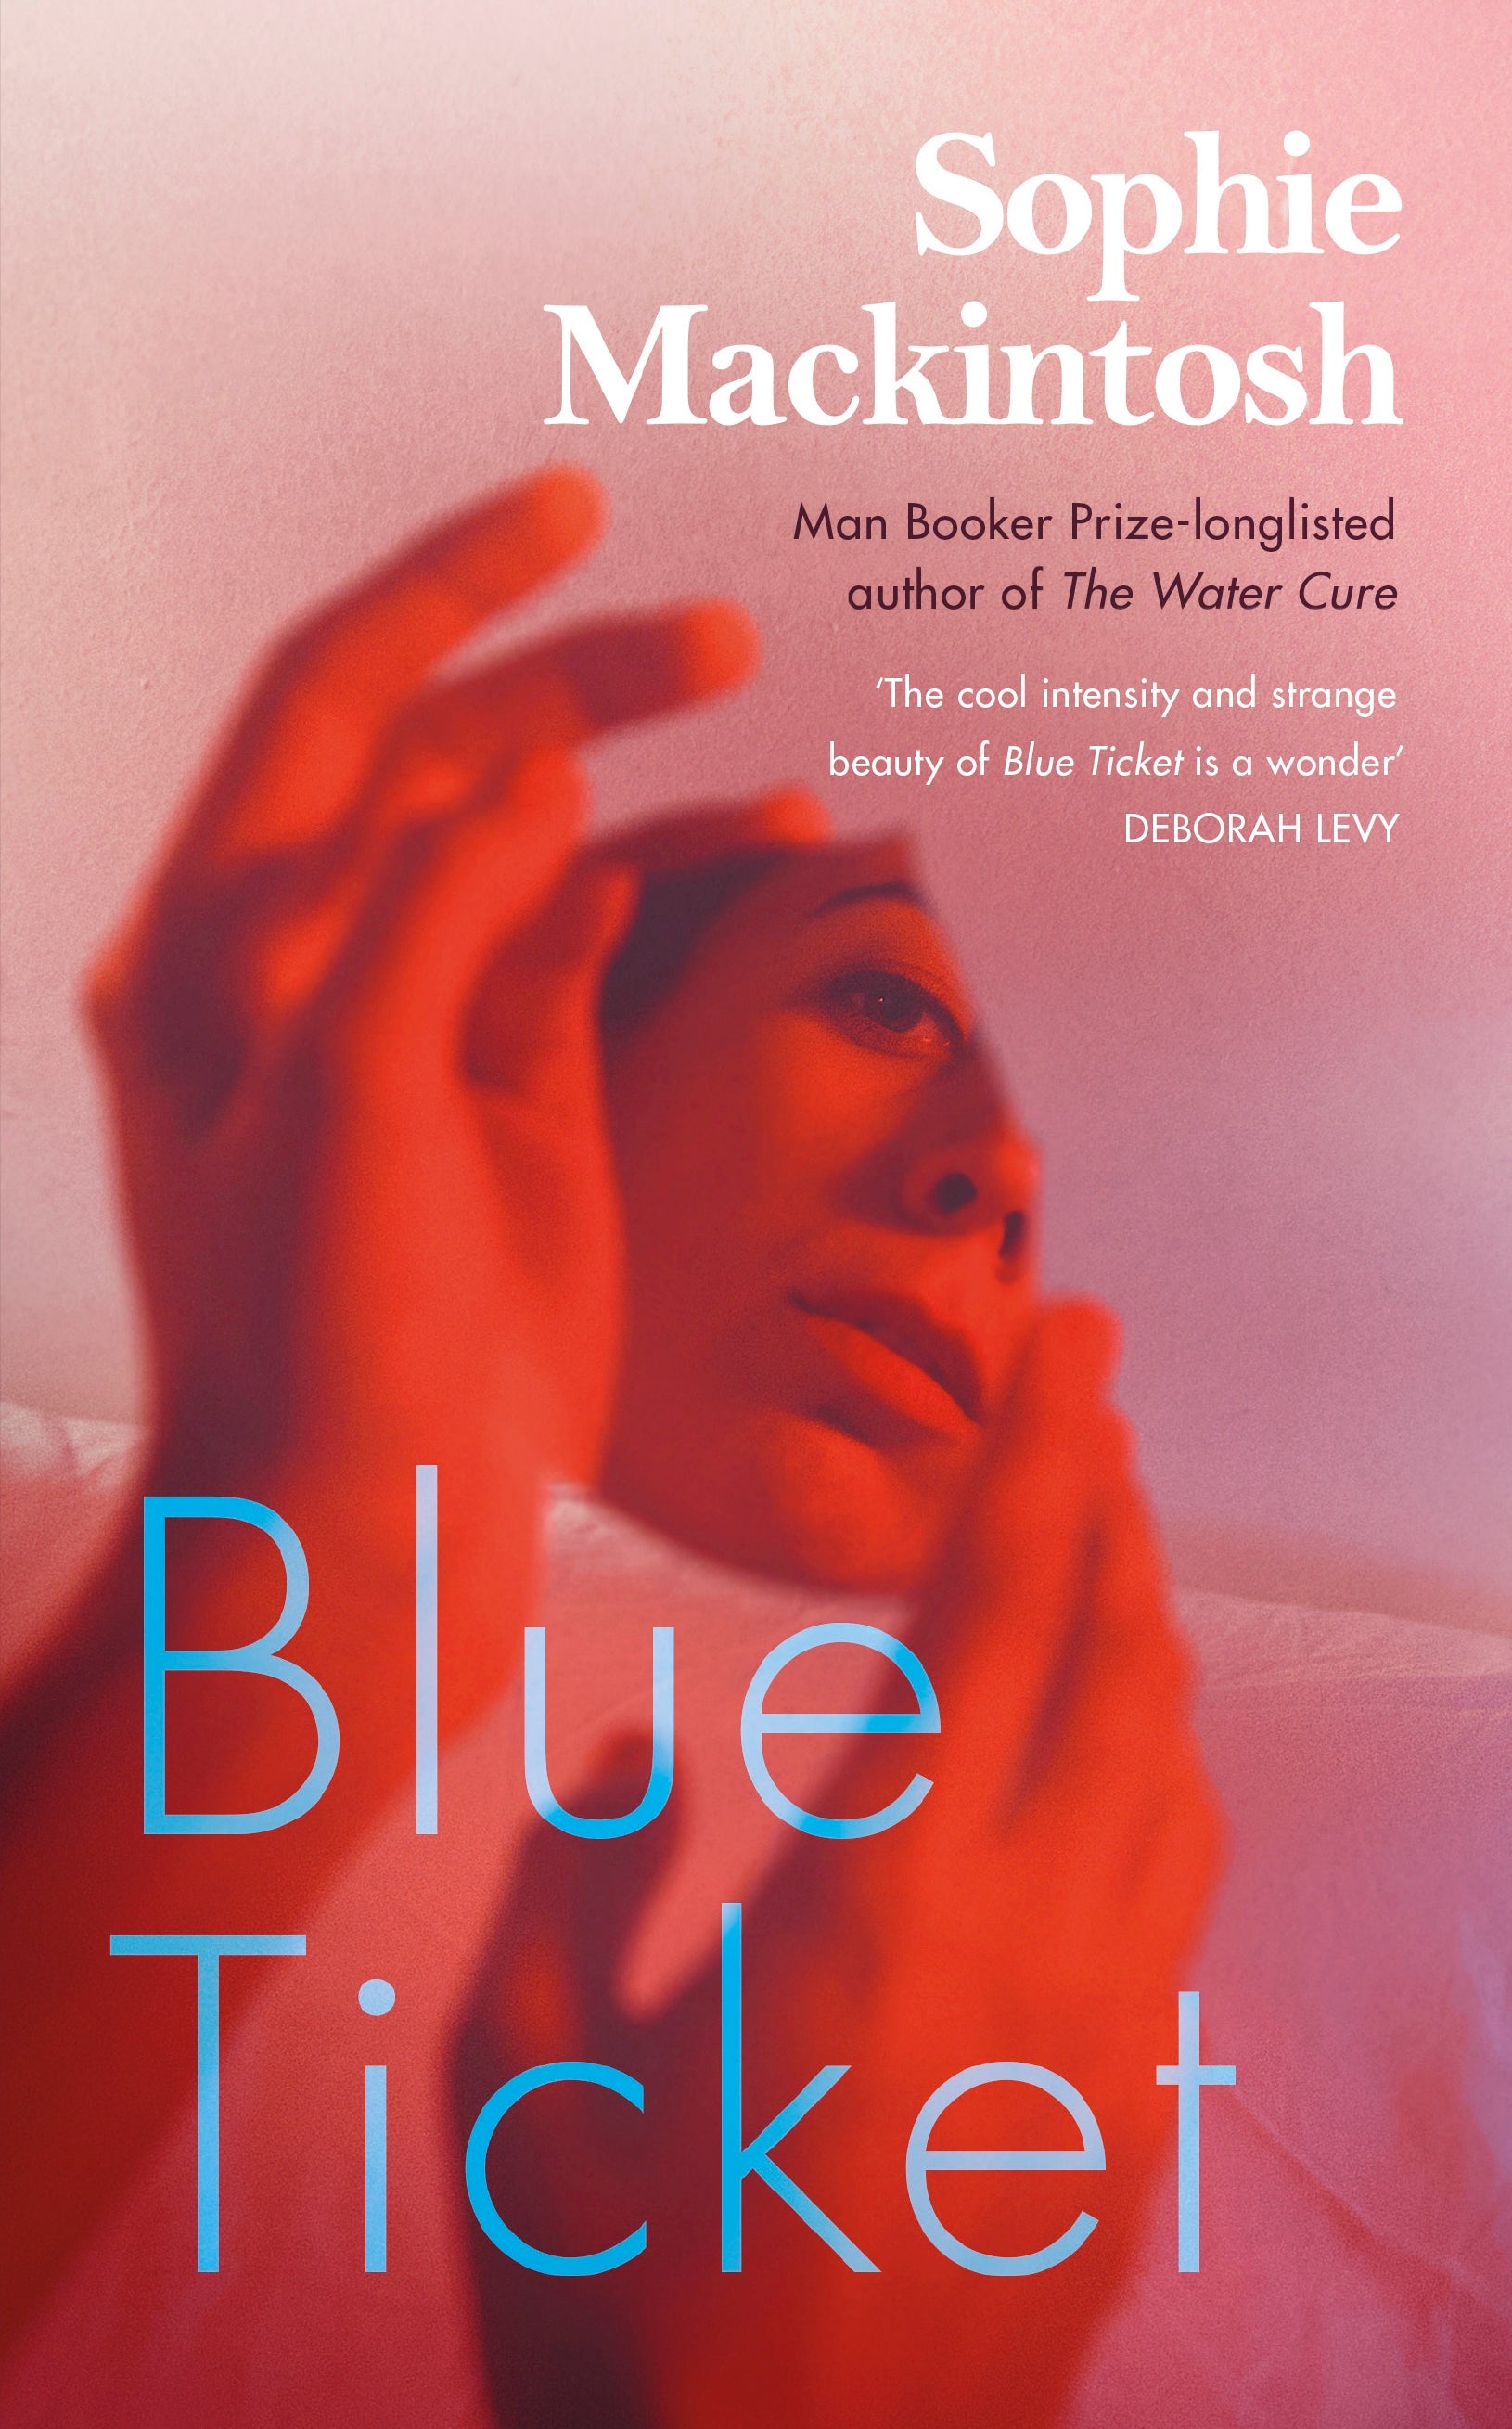 'Blue Ticket’ is Mackintosh’s second published novel